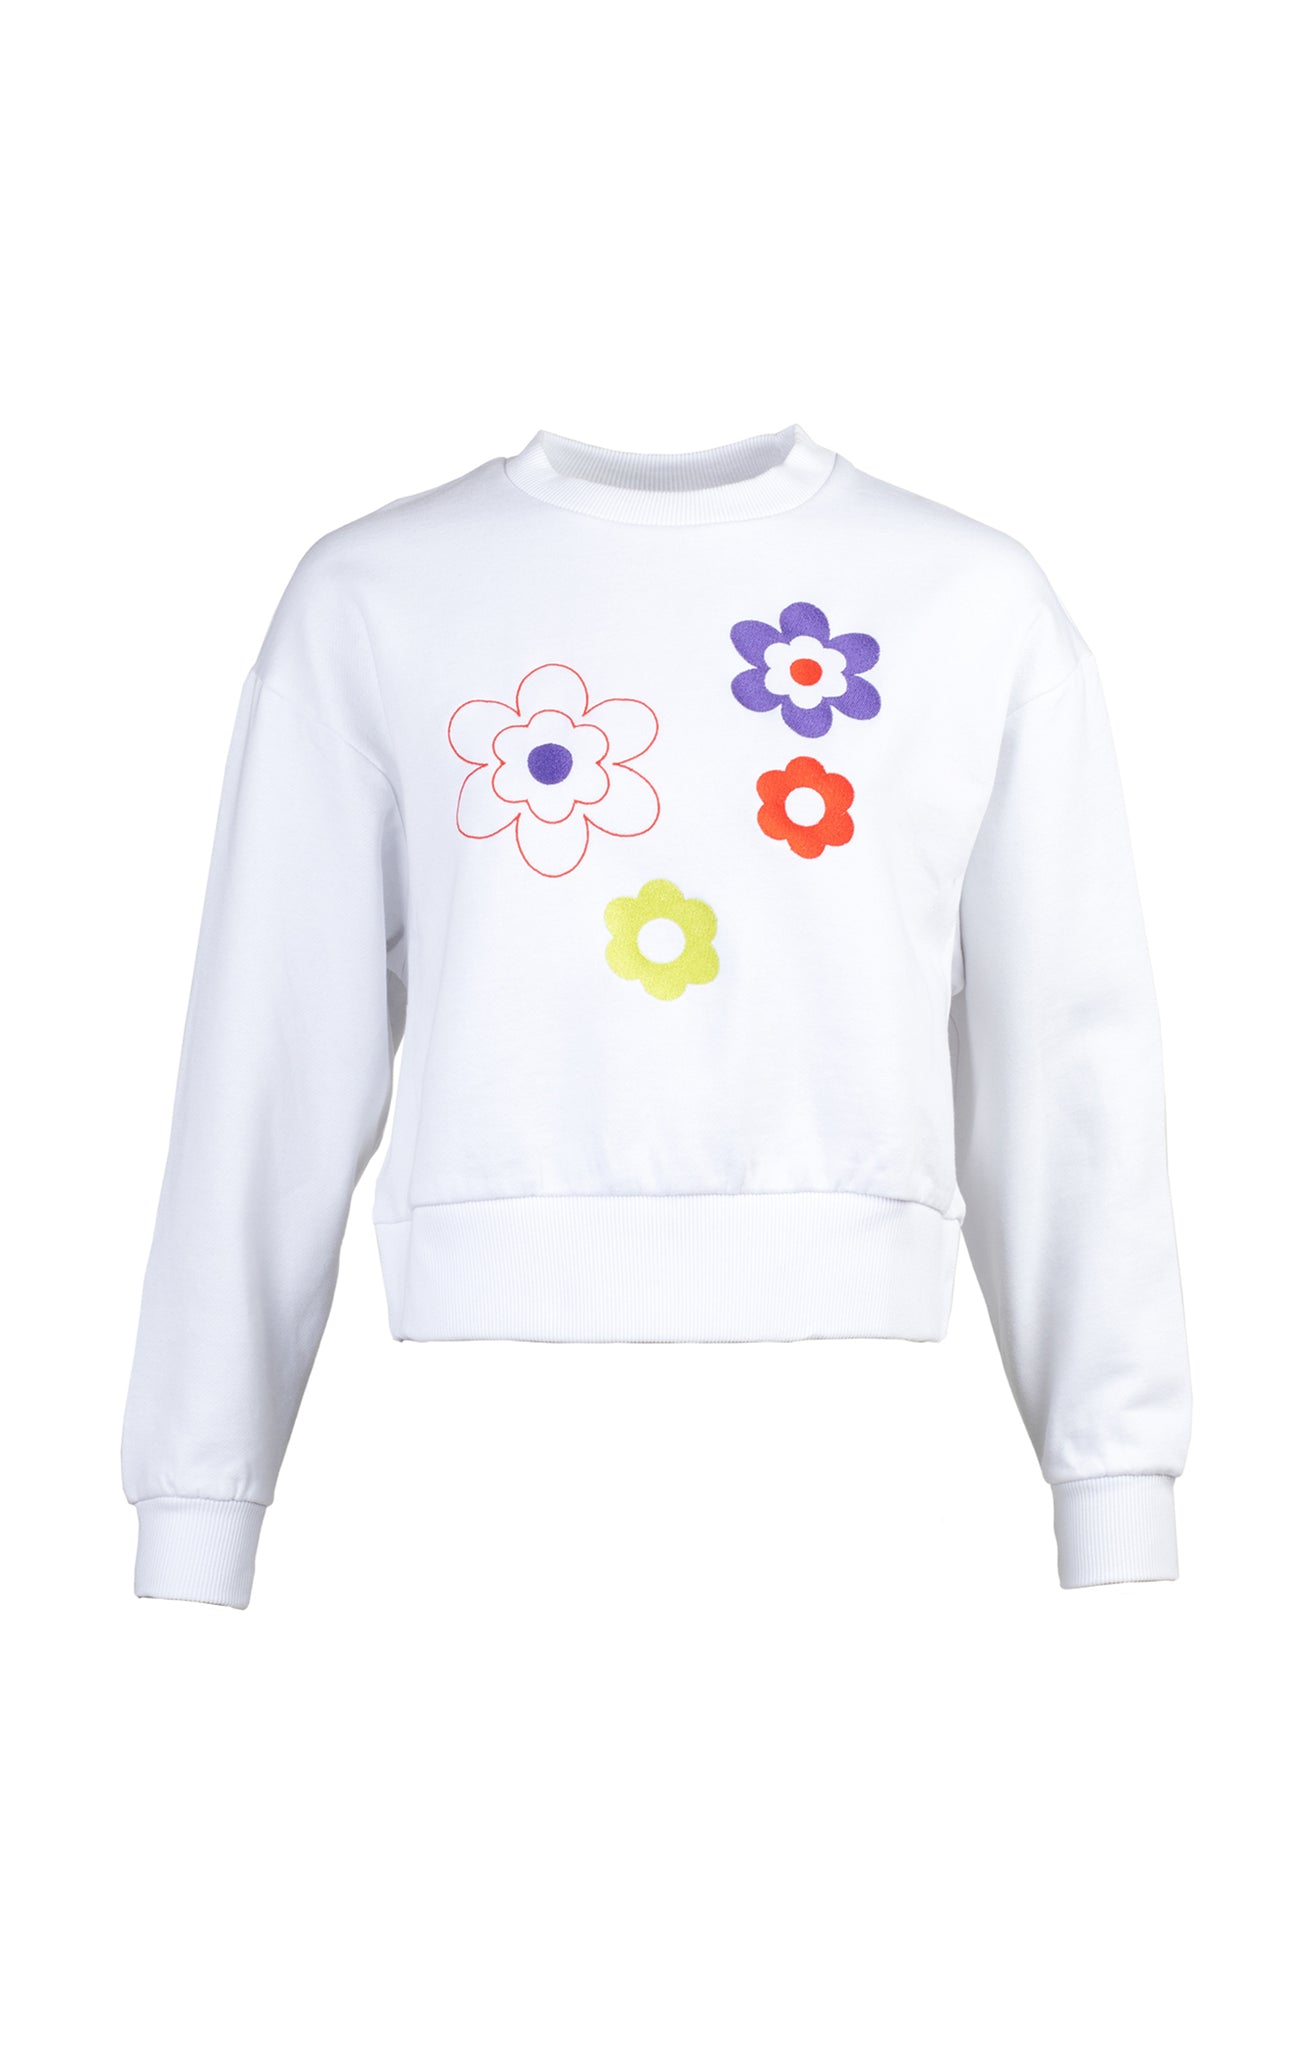 MARTHA embroidered sweatshirt 'space flowers'